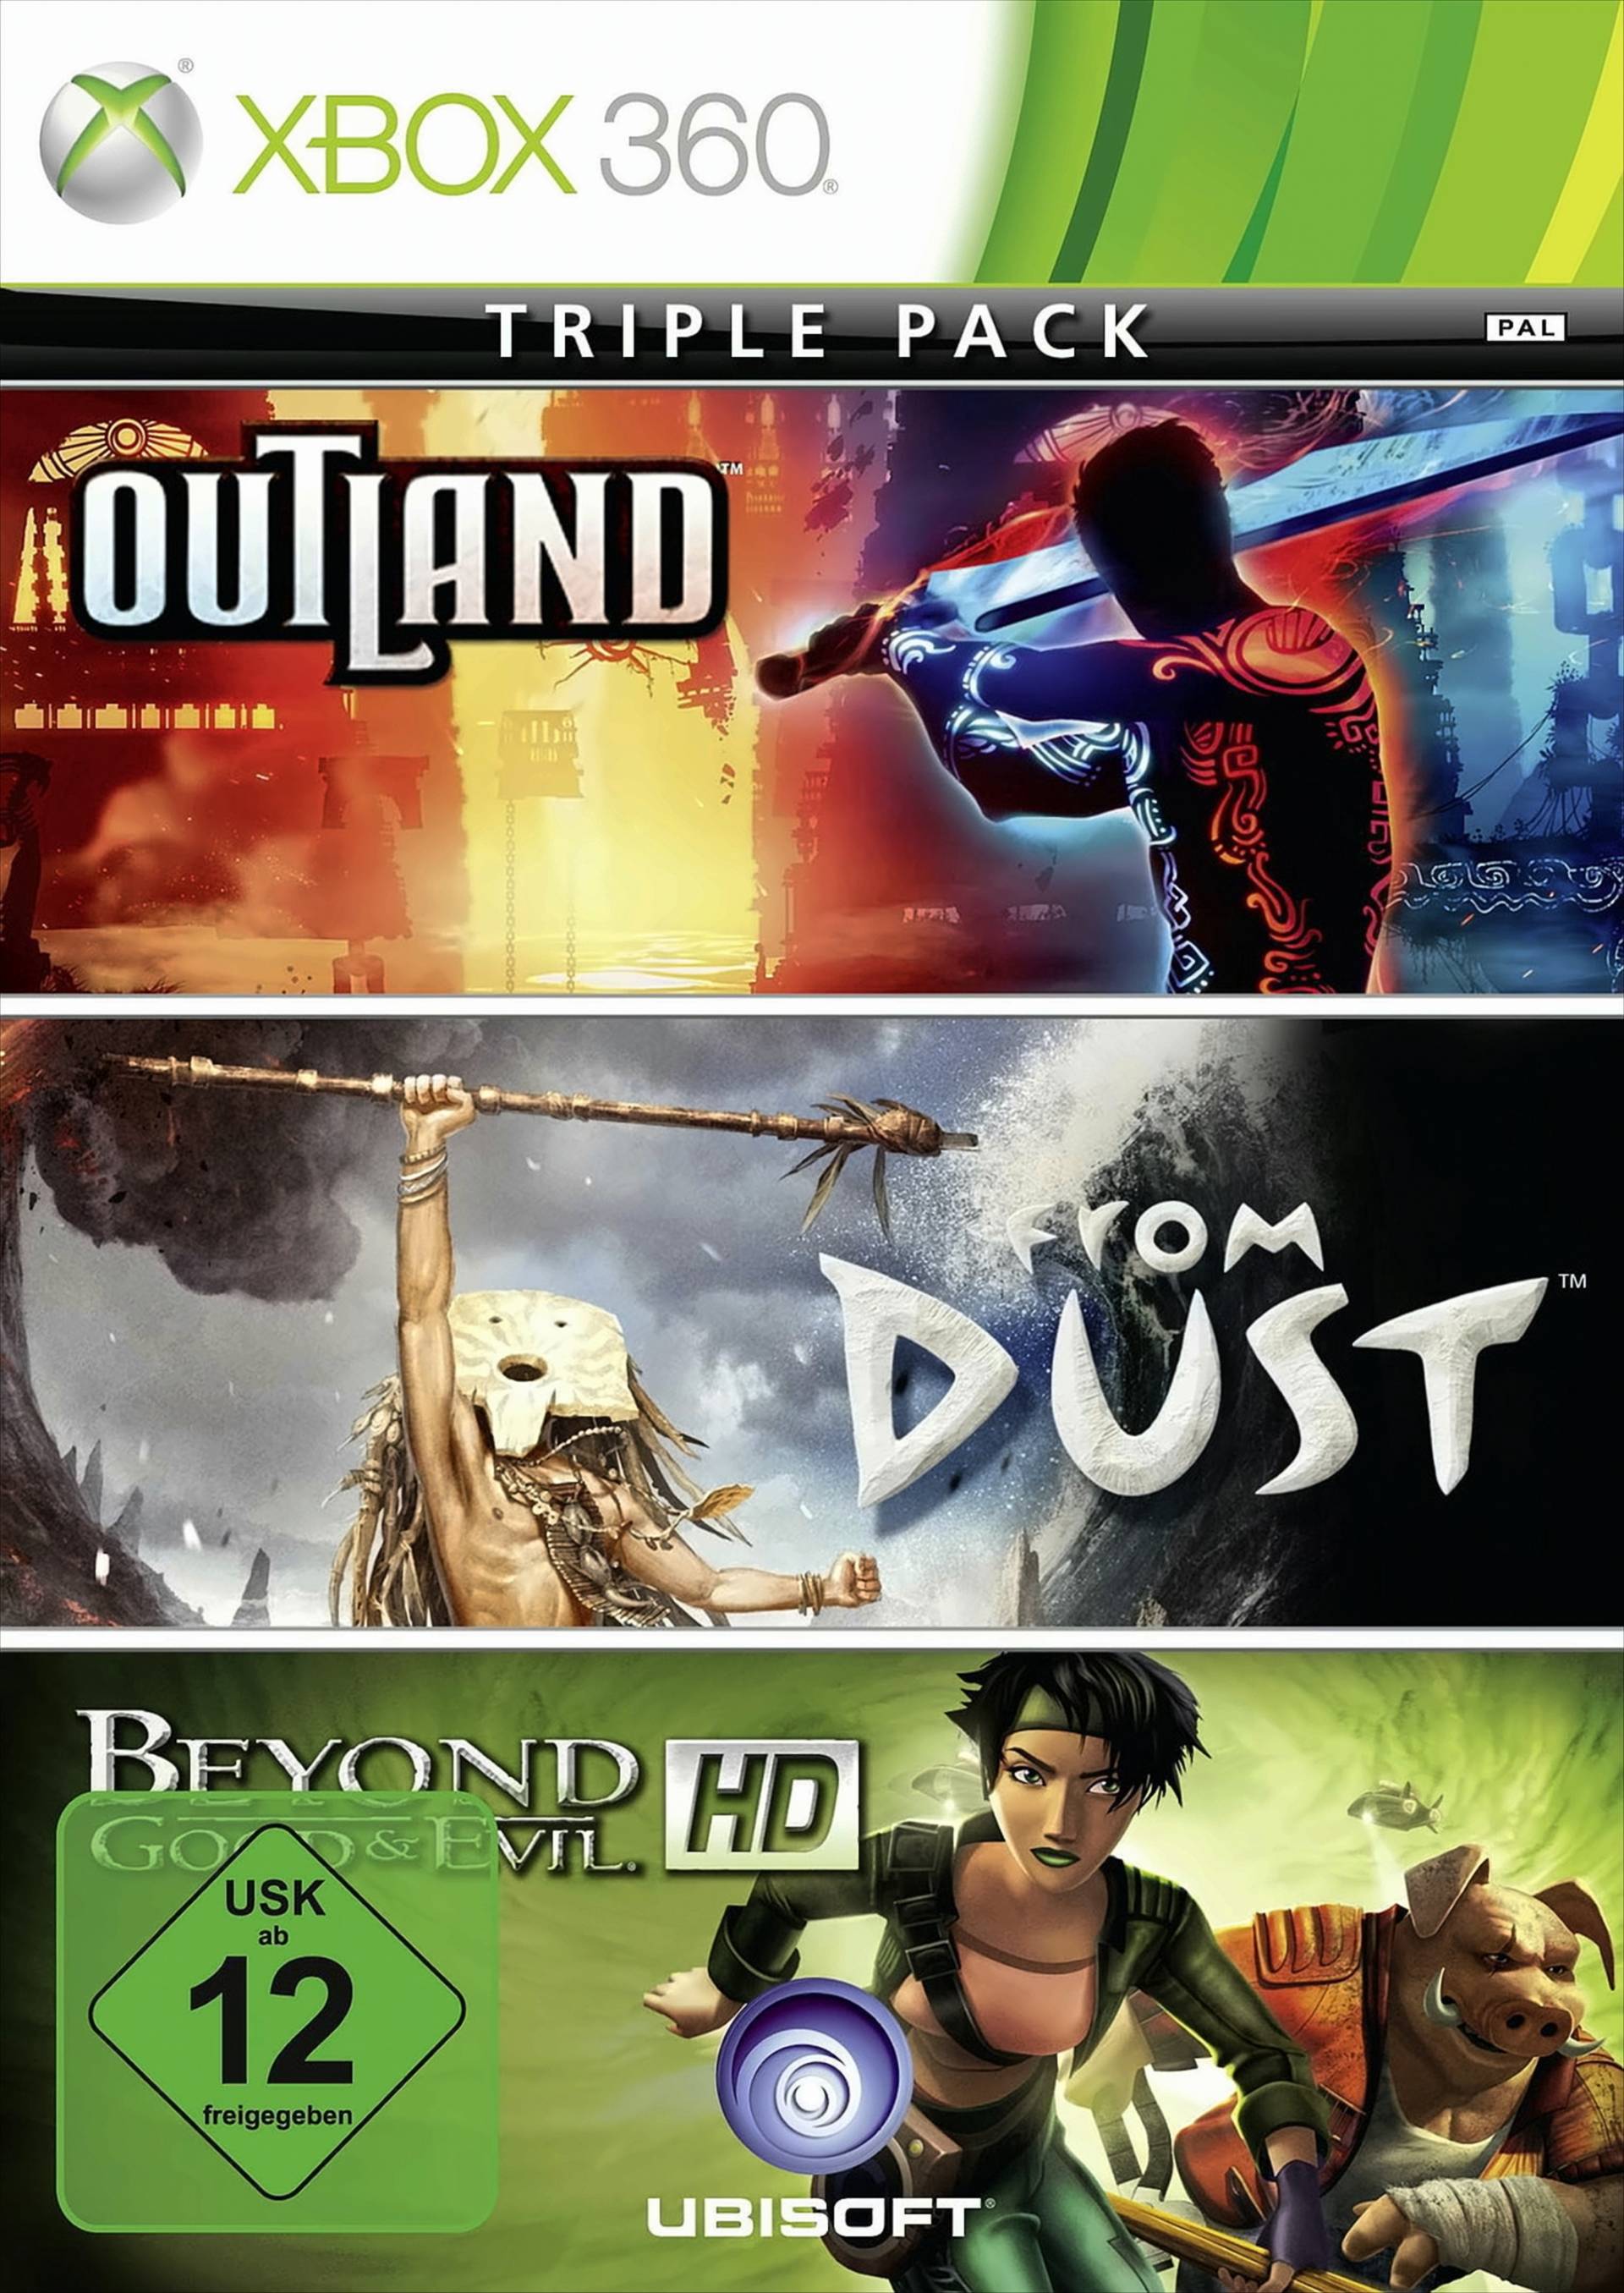 Xbox 360 Triple Pack: Outland / From Dust / Beyond Good & Evil HD von Ubi Soft